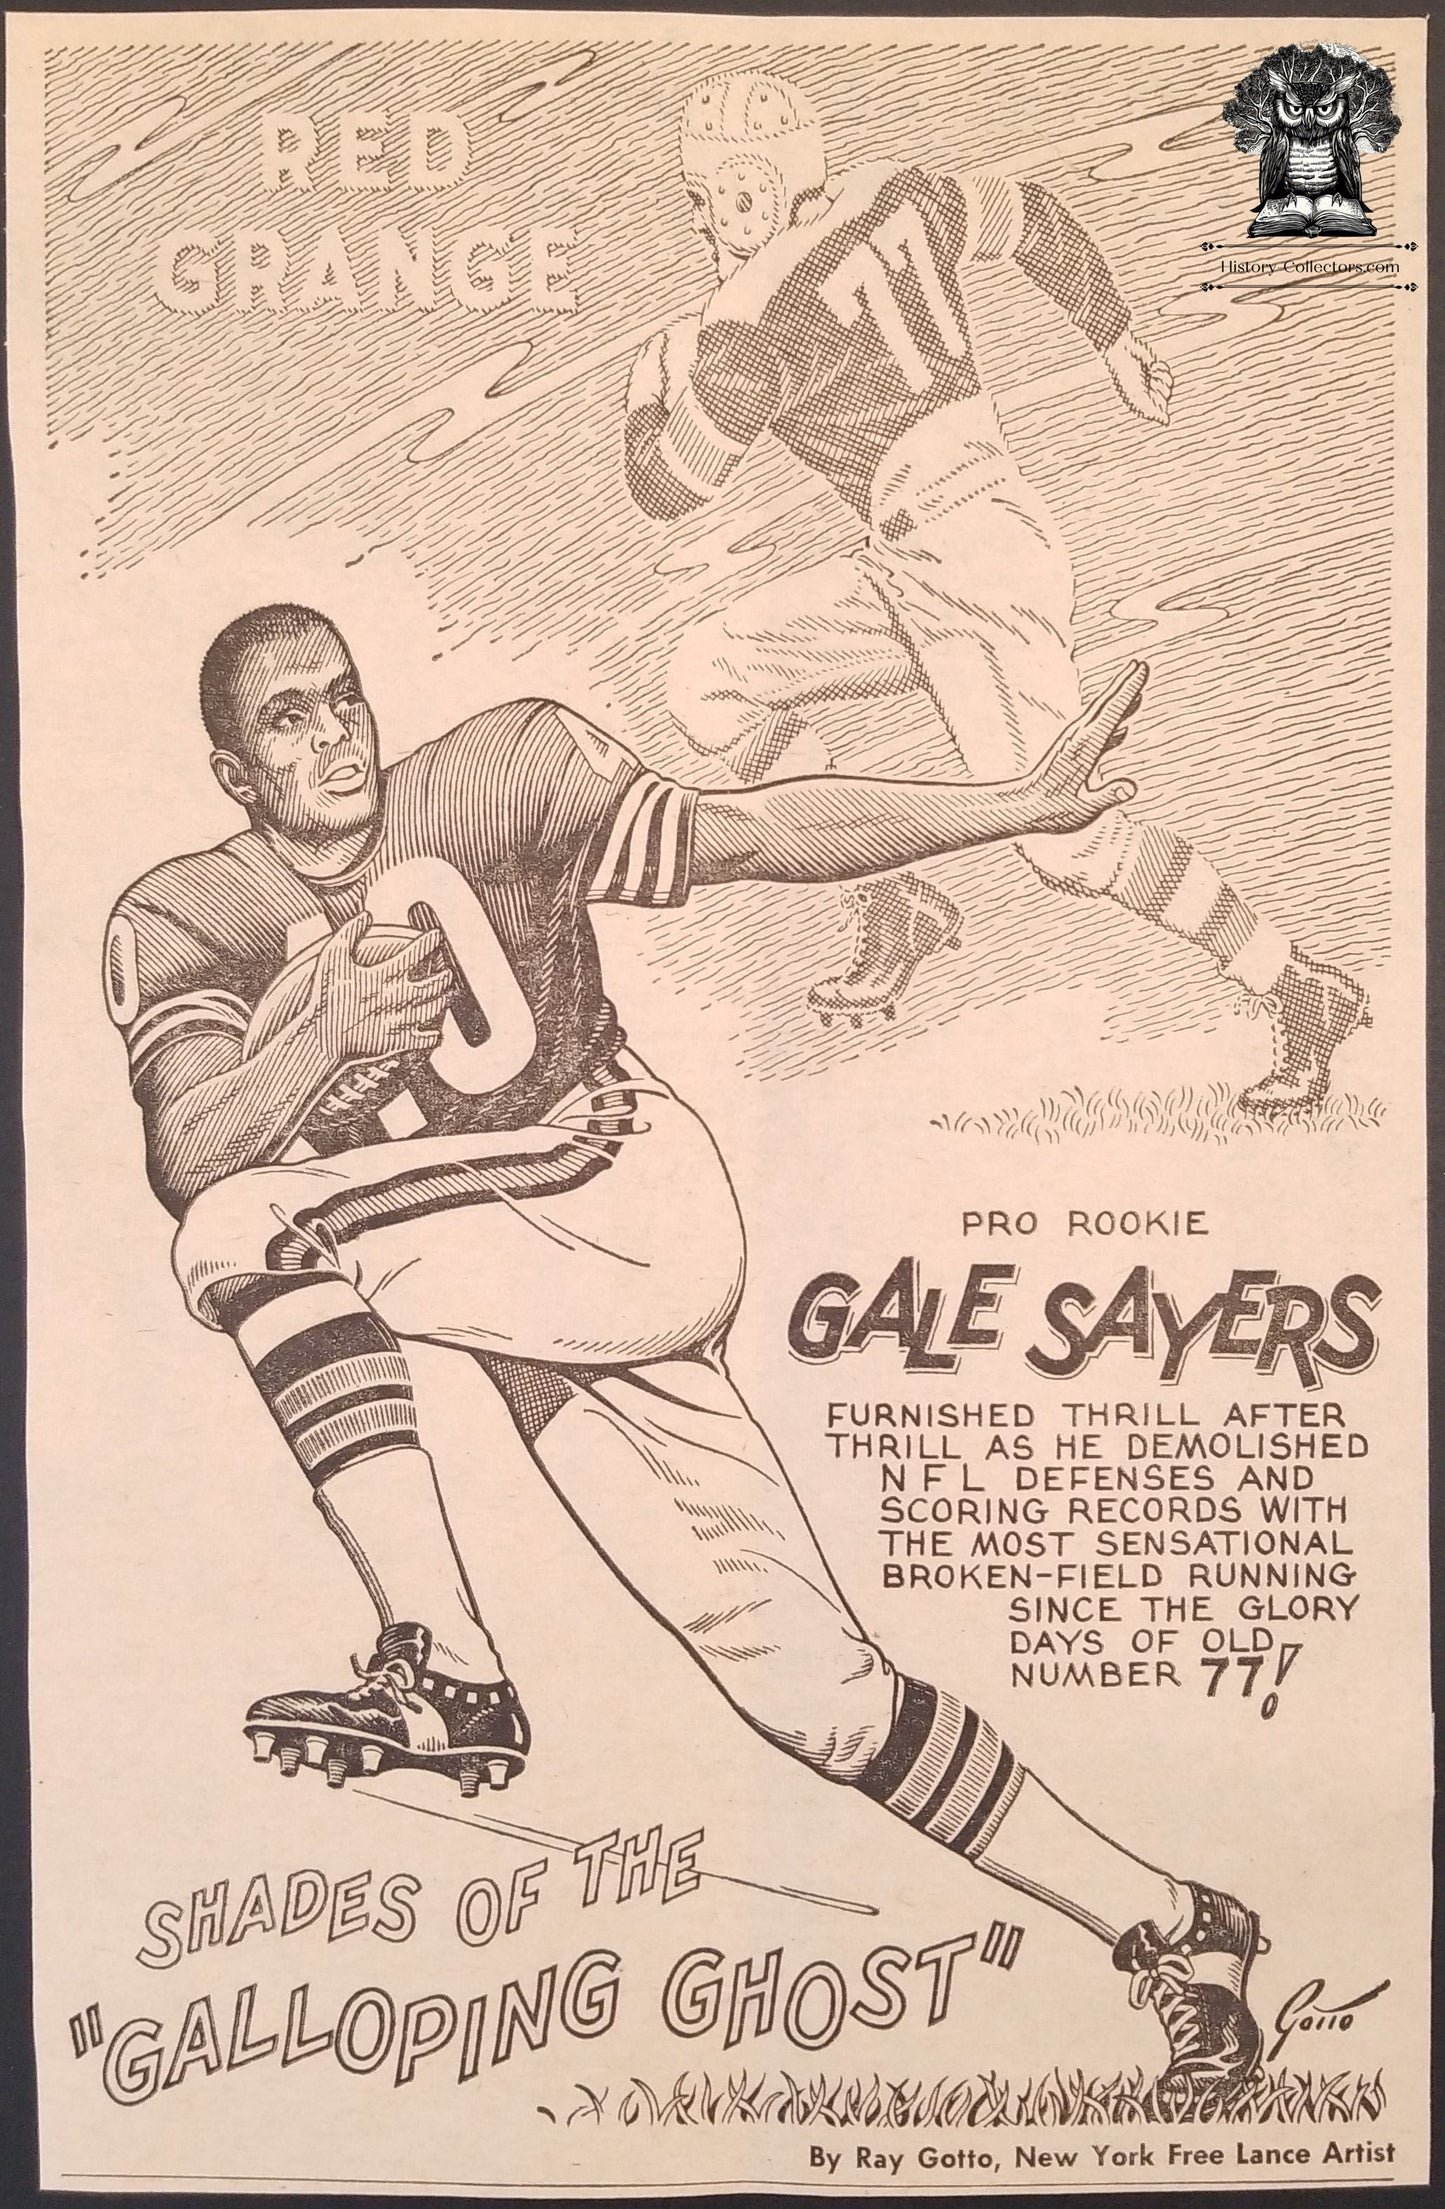 1965 Gale Sayers Red Grange Newsprint Illustration - Chicago Bears NFL Football - Ray Gotto New York Free Lance Artist